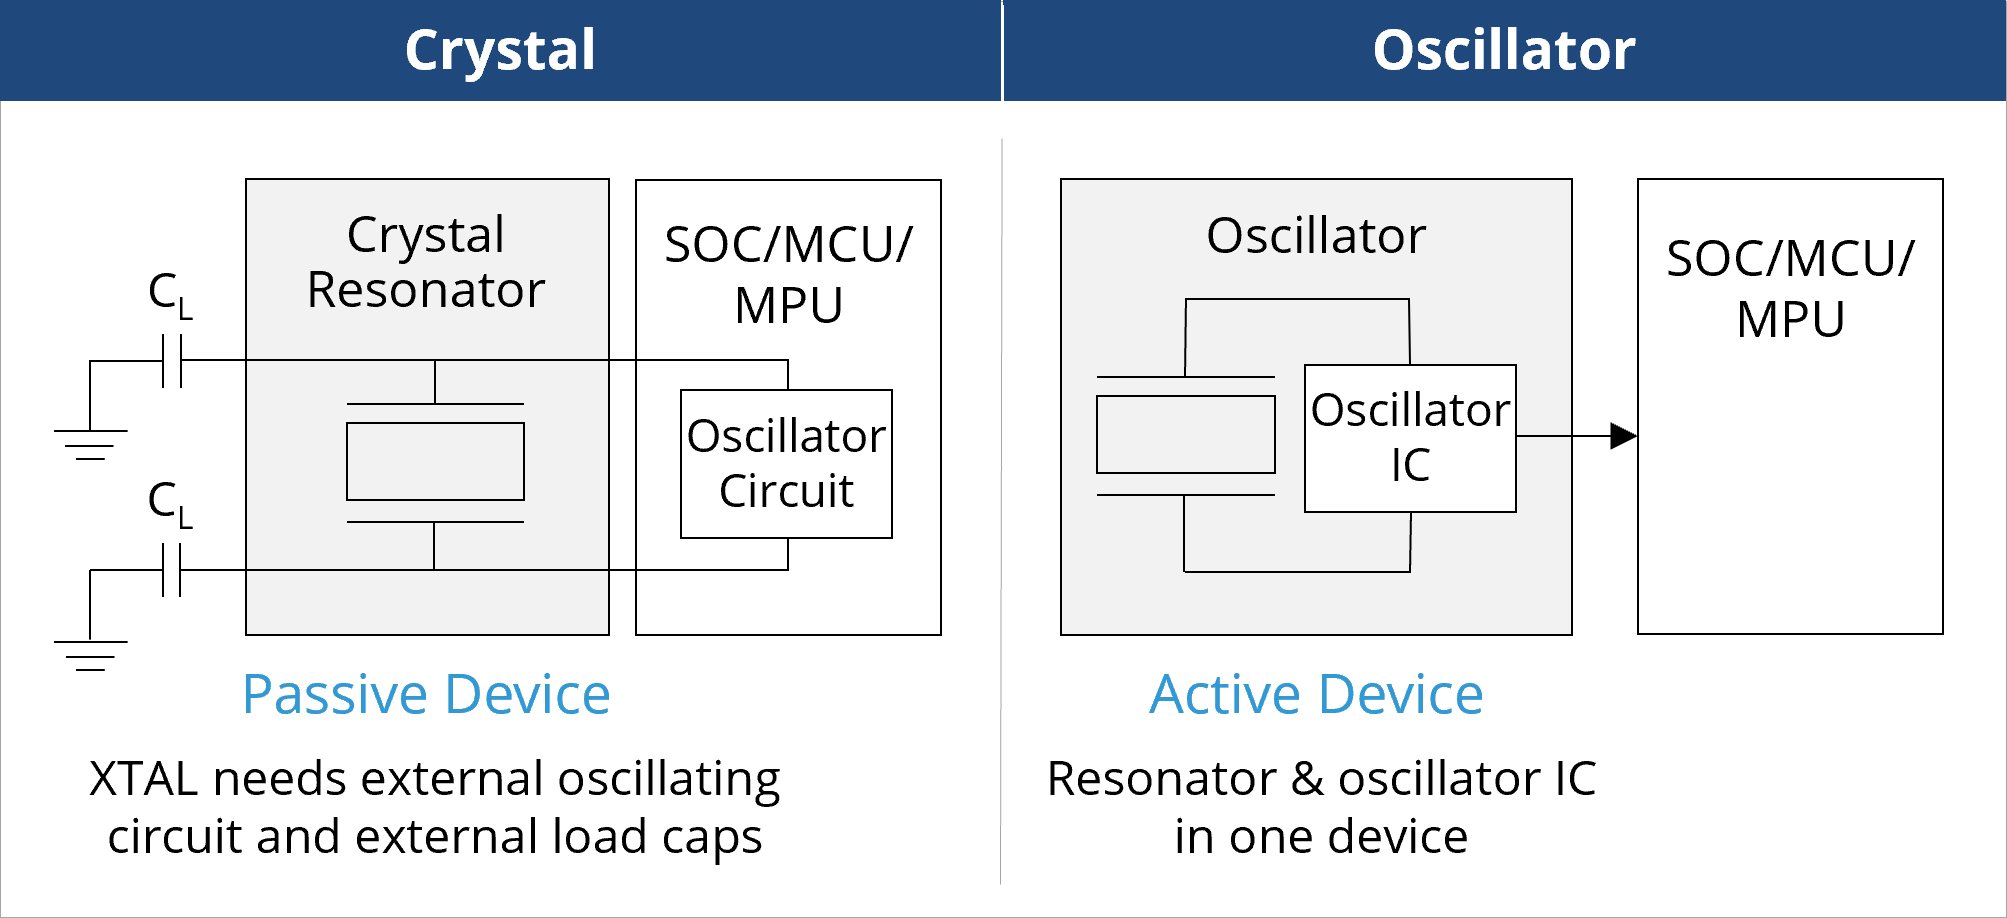 crystal passive component vs oscillator